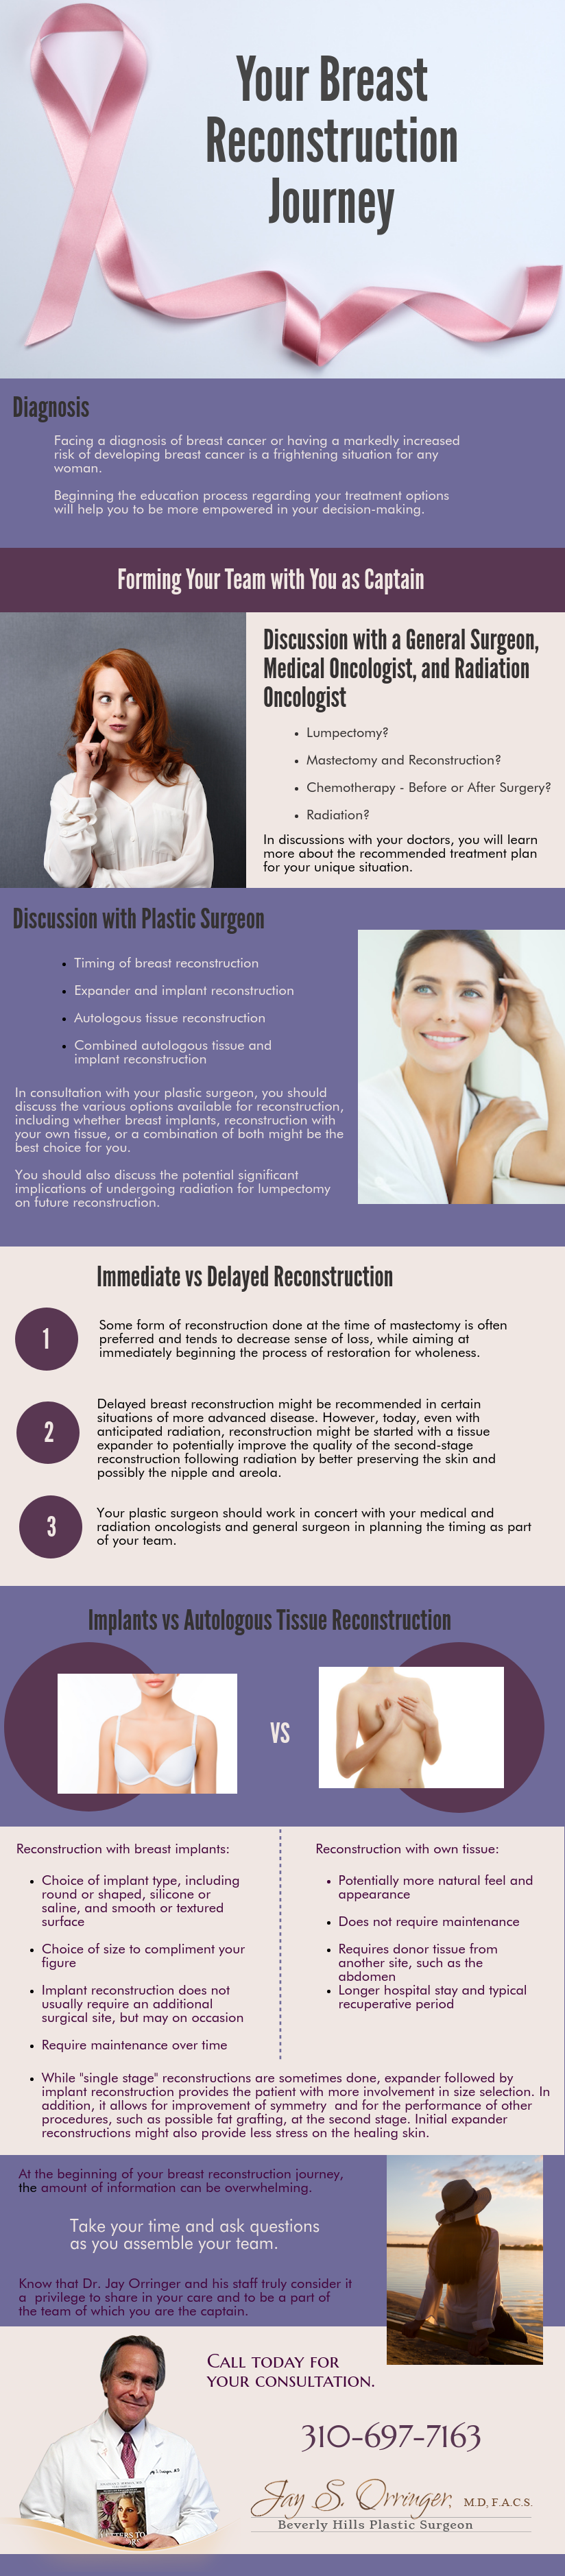 Breast Reconstruction Journey